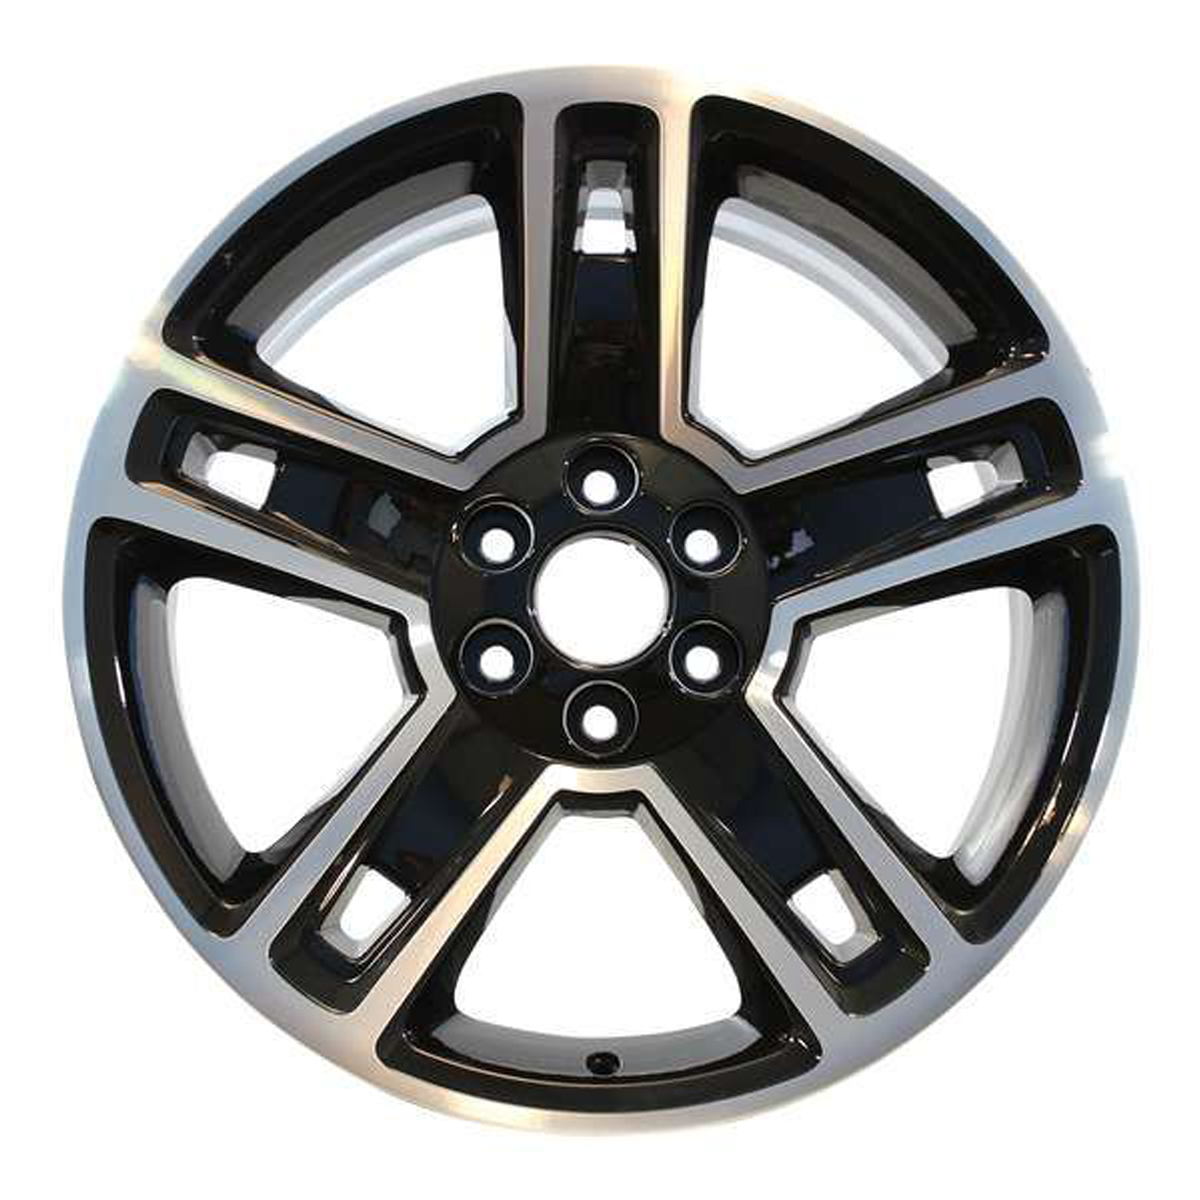 2014 Chevrolet Silverado 1500 New 22" Replacement Wheel Rim RW5664MB